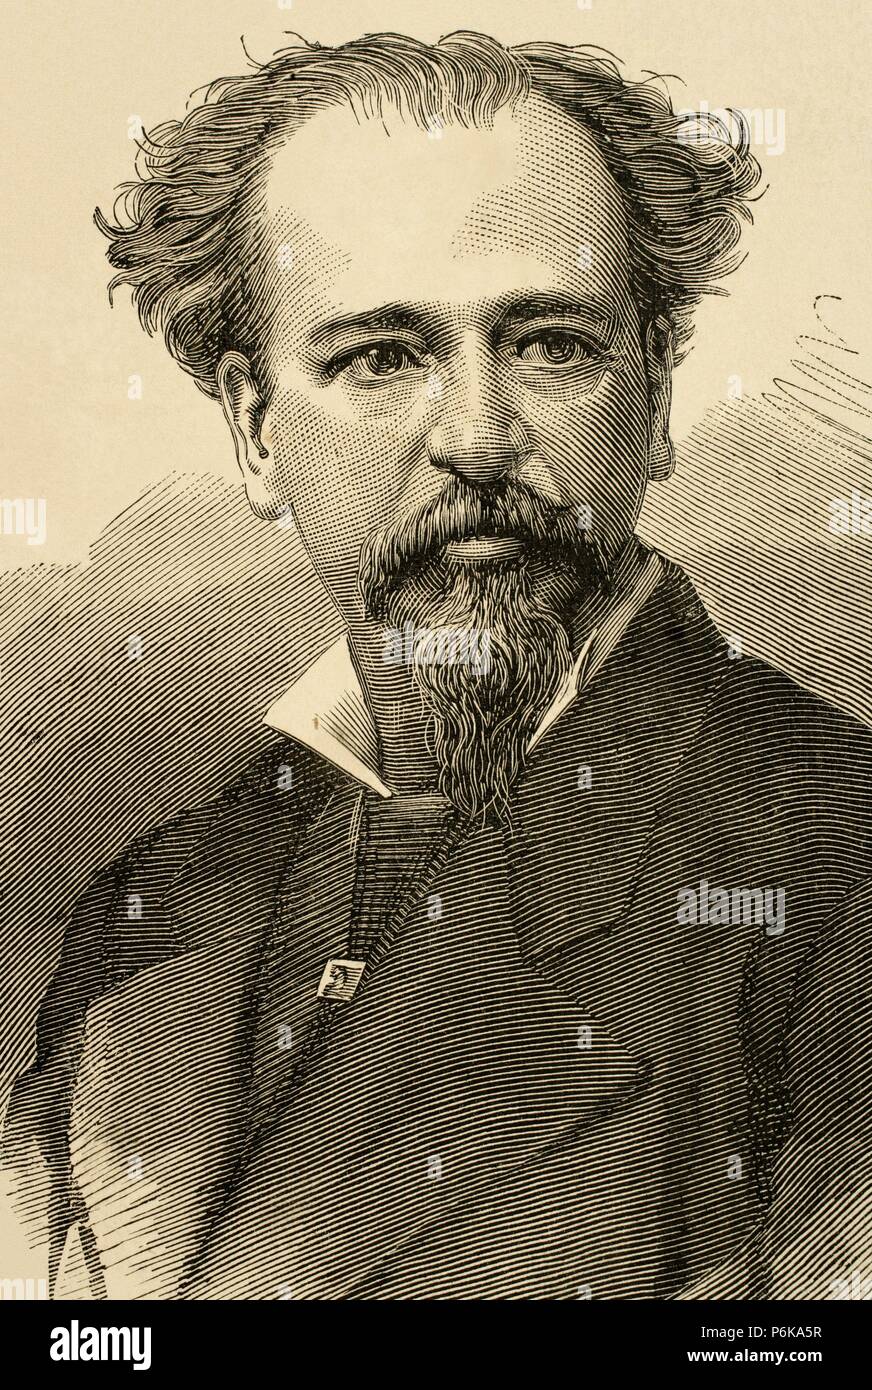 Juan Antonio Mateos Lozada (1831-1913). Playwright, novelist, poet and Mexican liberal politician. Engraving by A. Carretero. La Ilustracion Espanola y Americana, 1879. Stock Photo